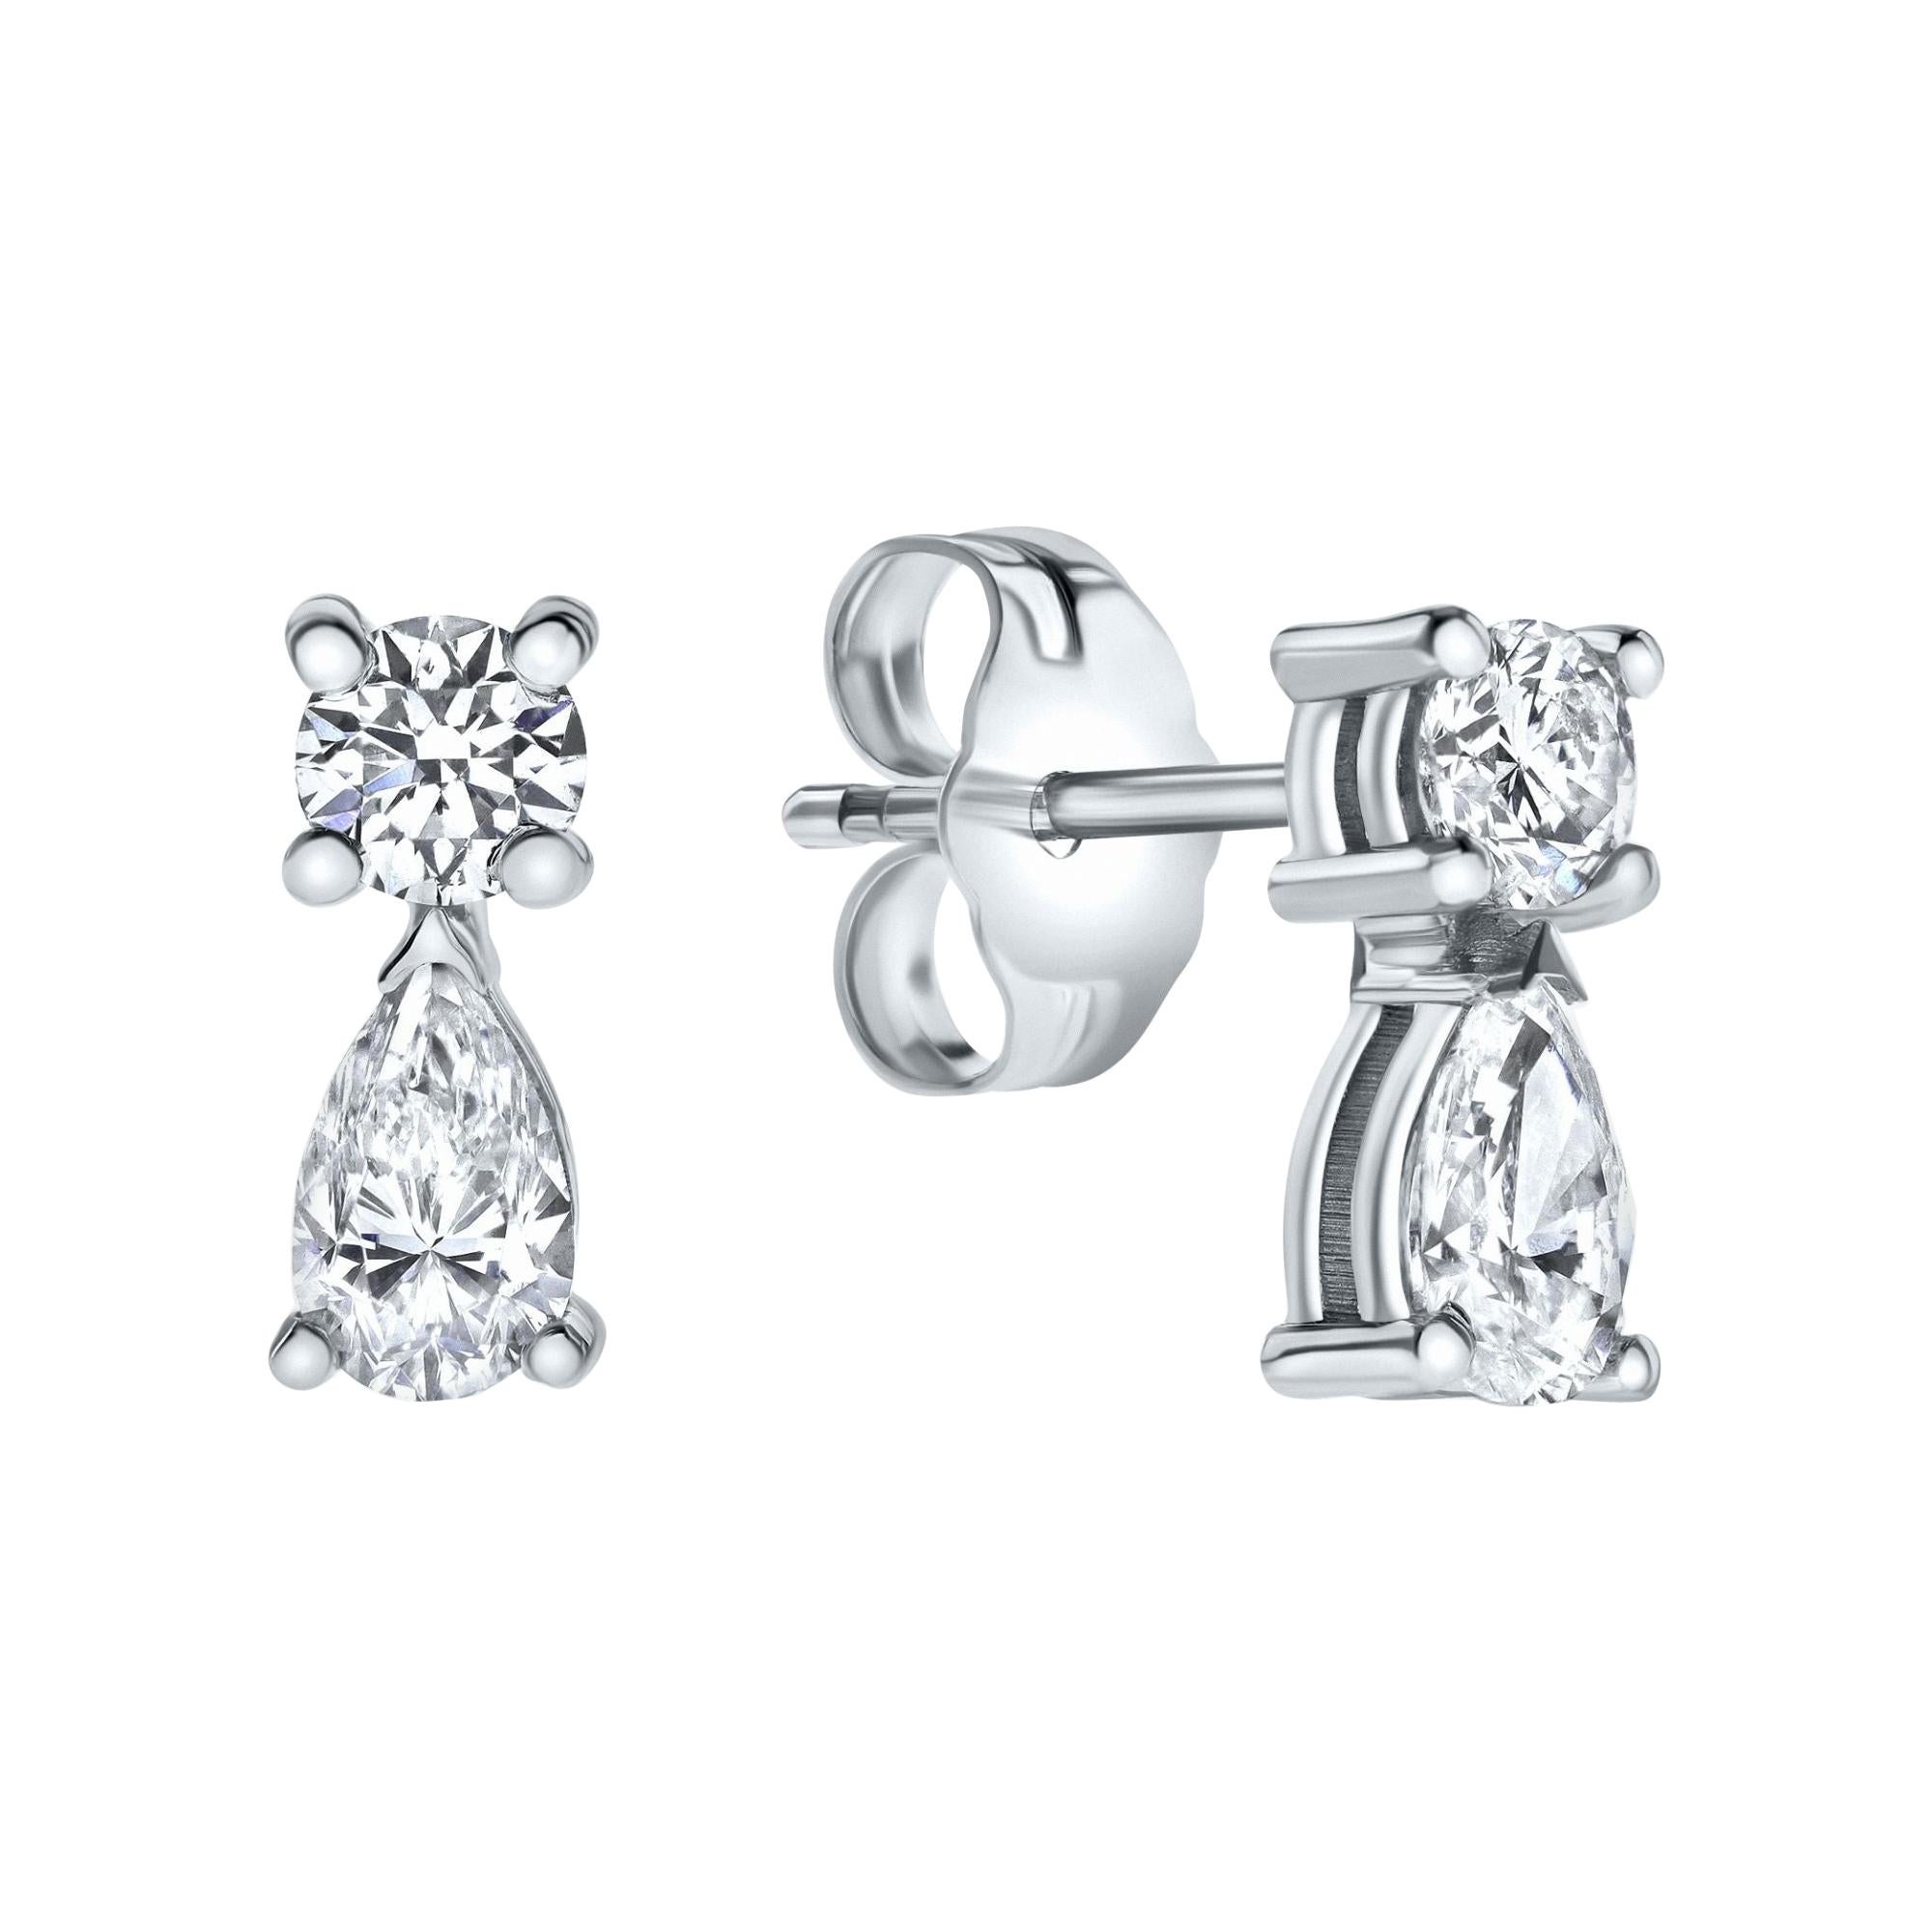 0.56 Carat Round & Pear Cut Diamond Fantasy Earrings in 14K White Gold For Sale